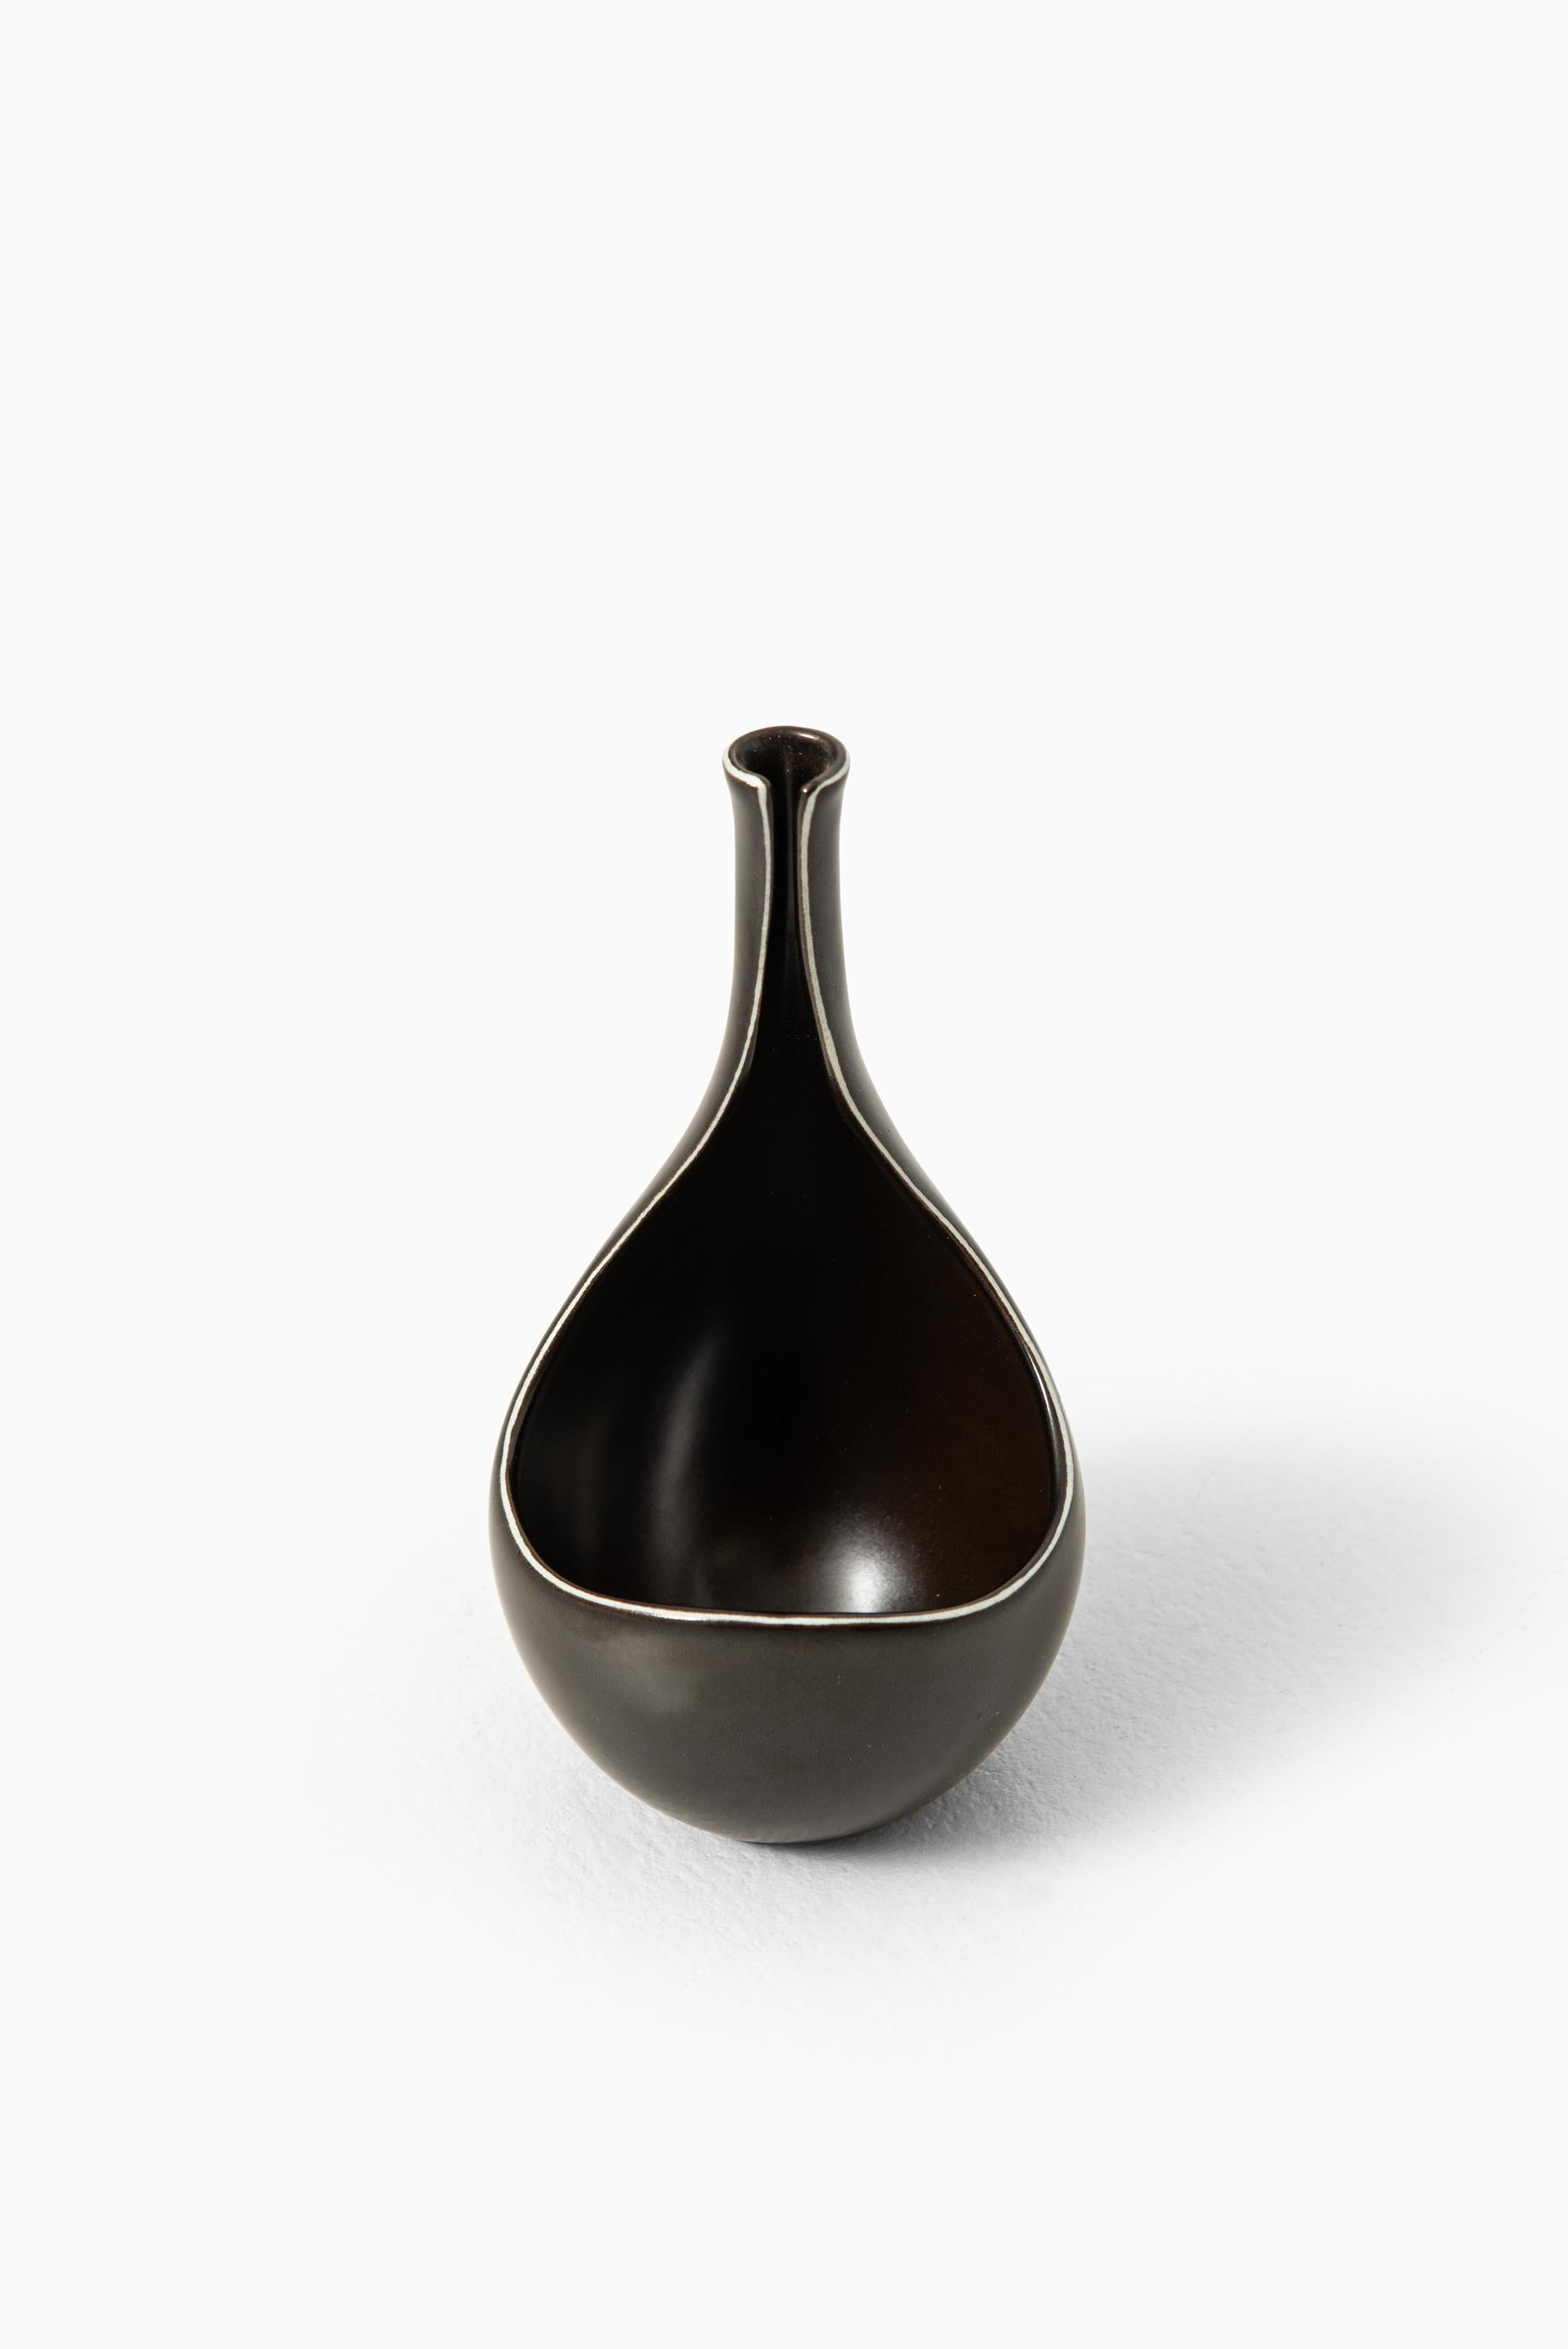 Scandinavian Modern Stig Lindberg Ceramic Vase Model Pungo by Gustavsberg in Sweden For Sale